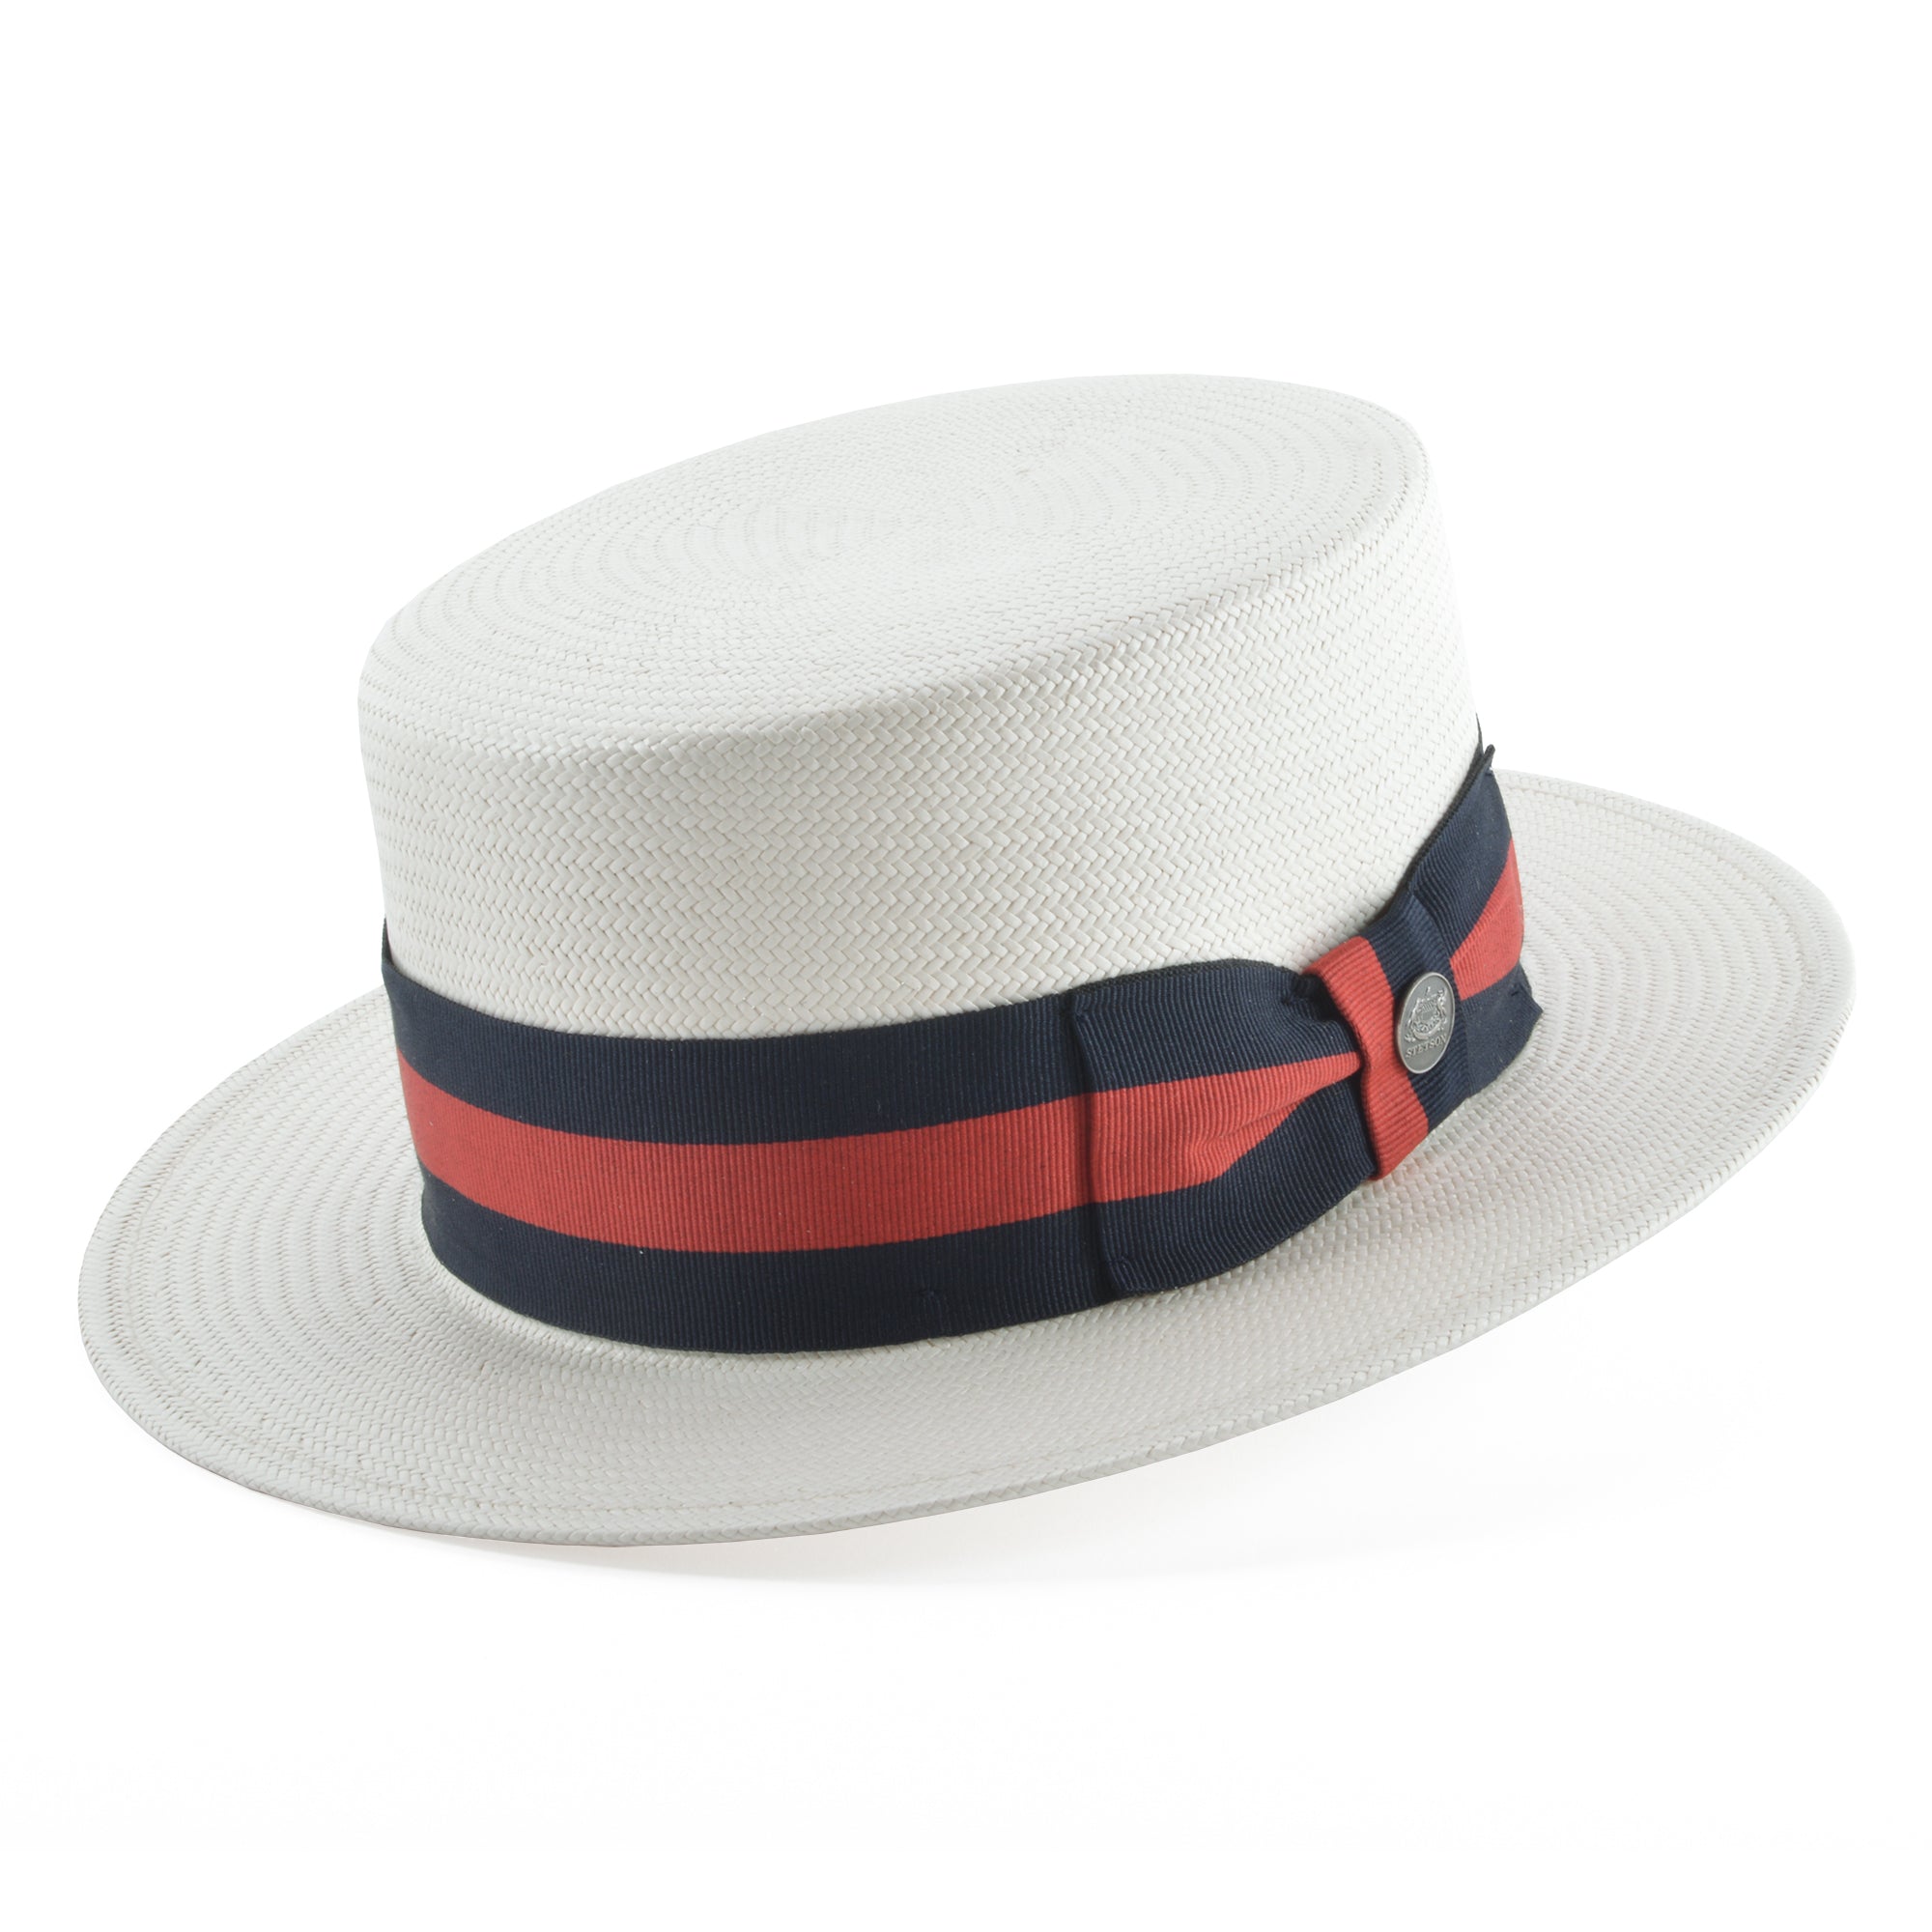 Stetson Keeneland Shantung Straw Boater Hat